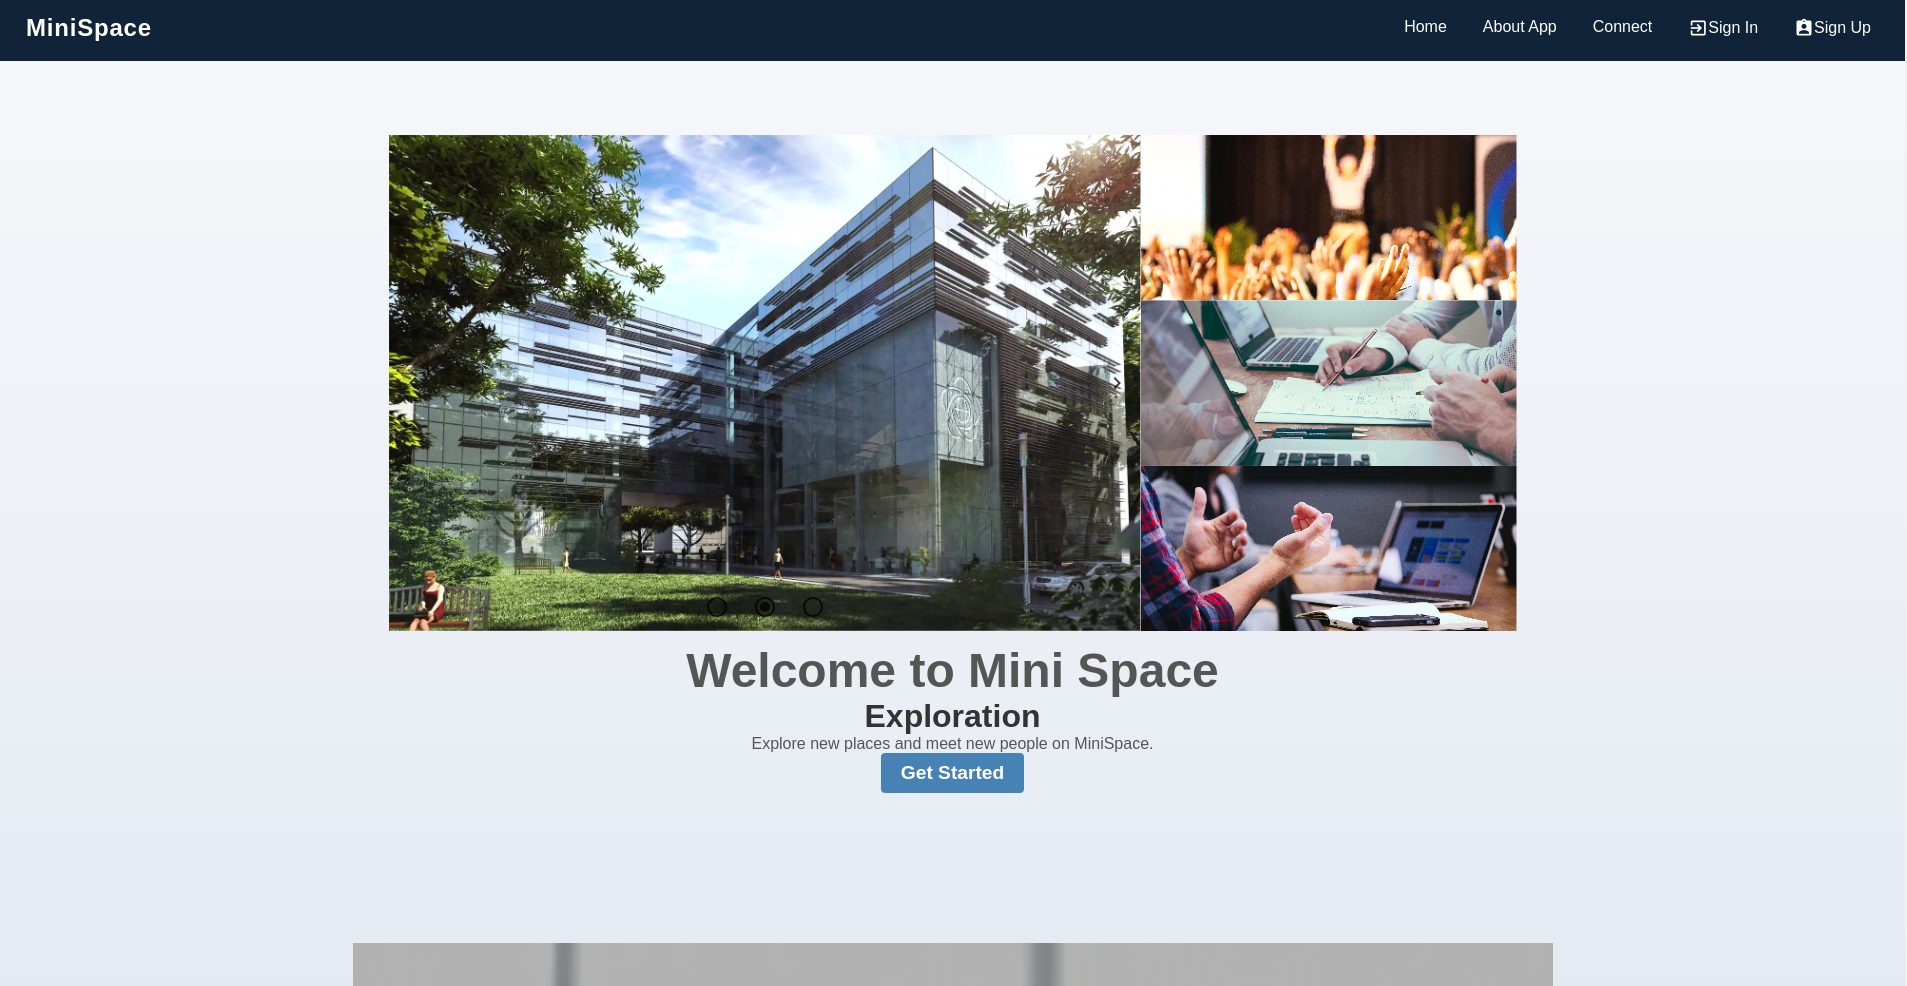 minispace-home.png